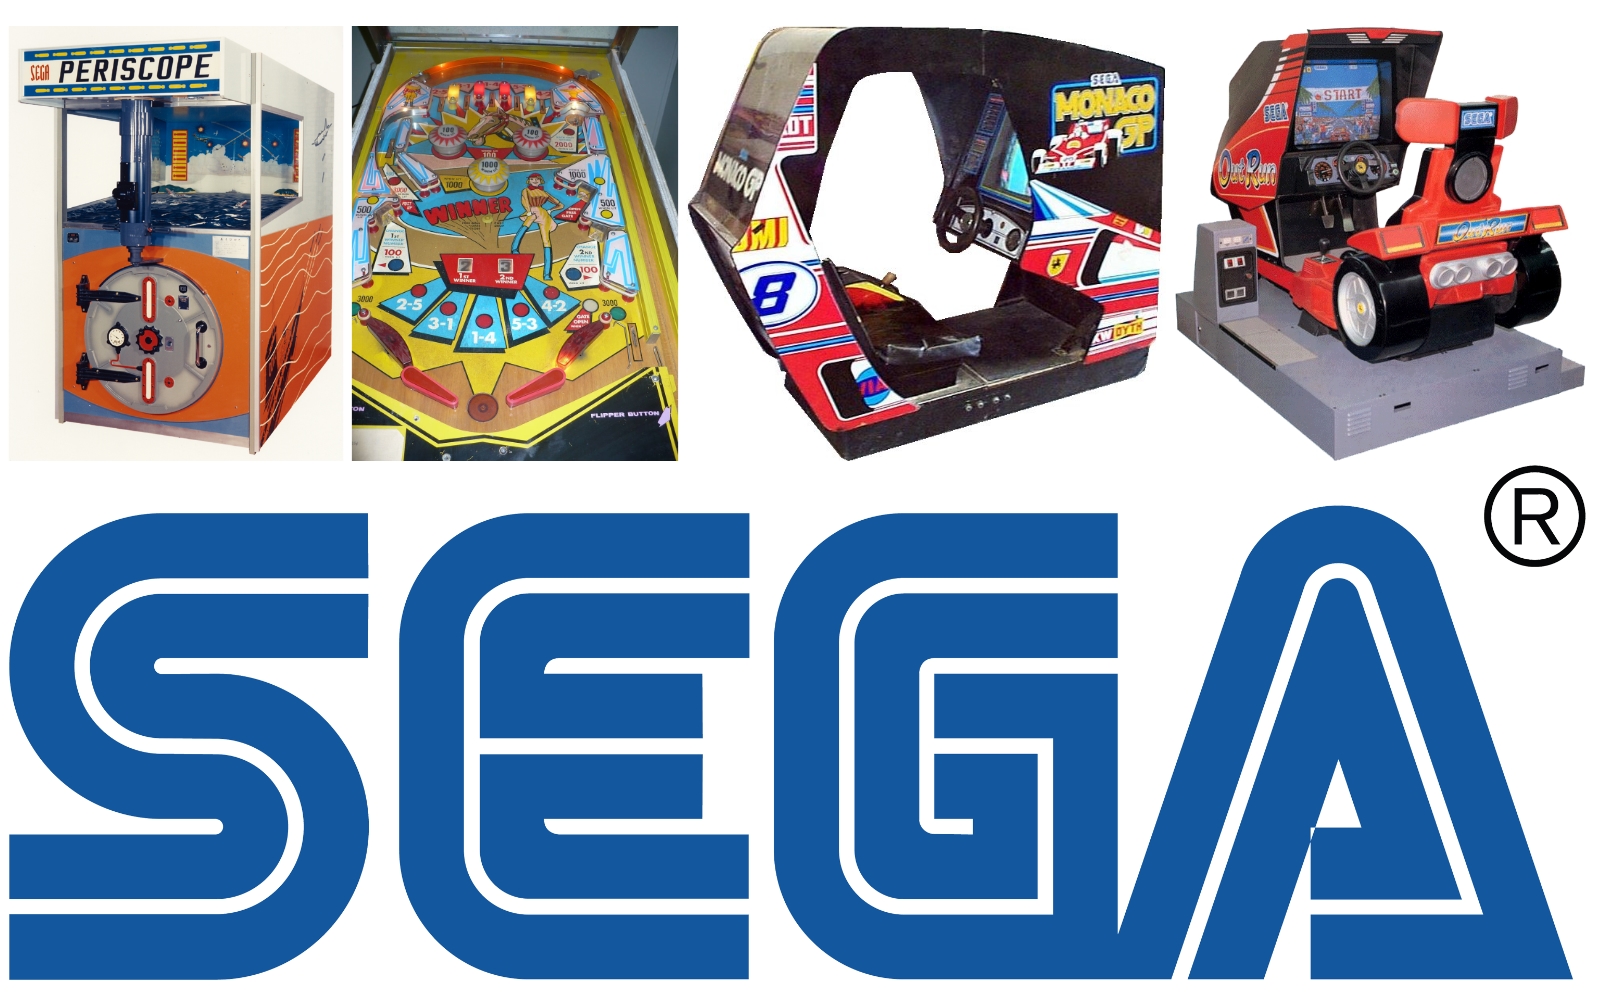 Sega-Arcade-Games.jpg